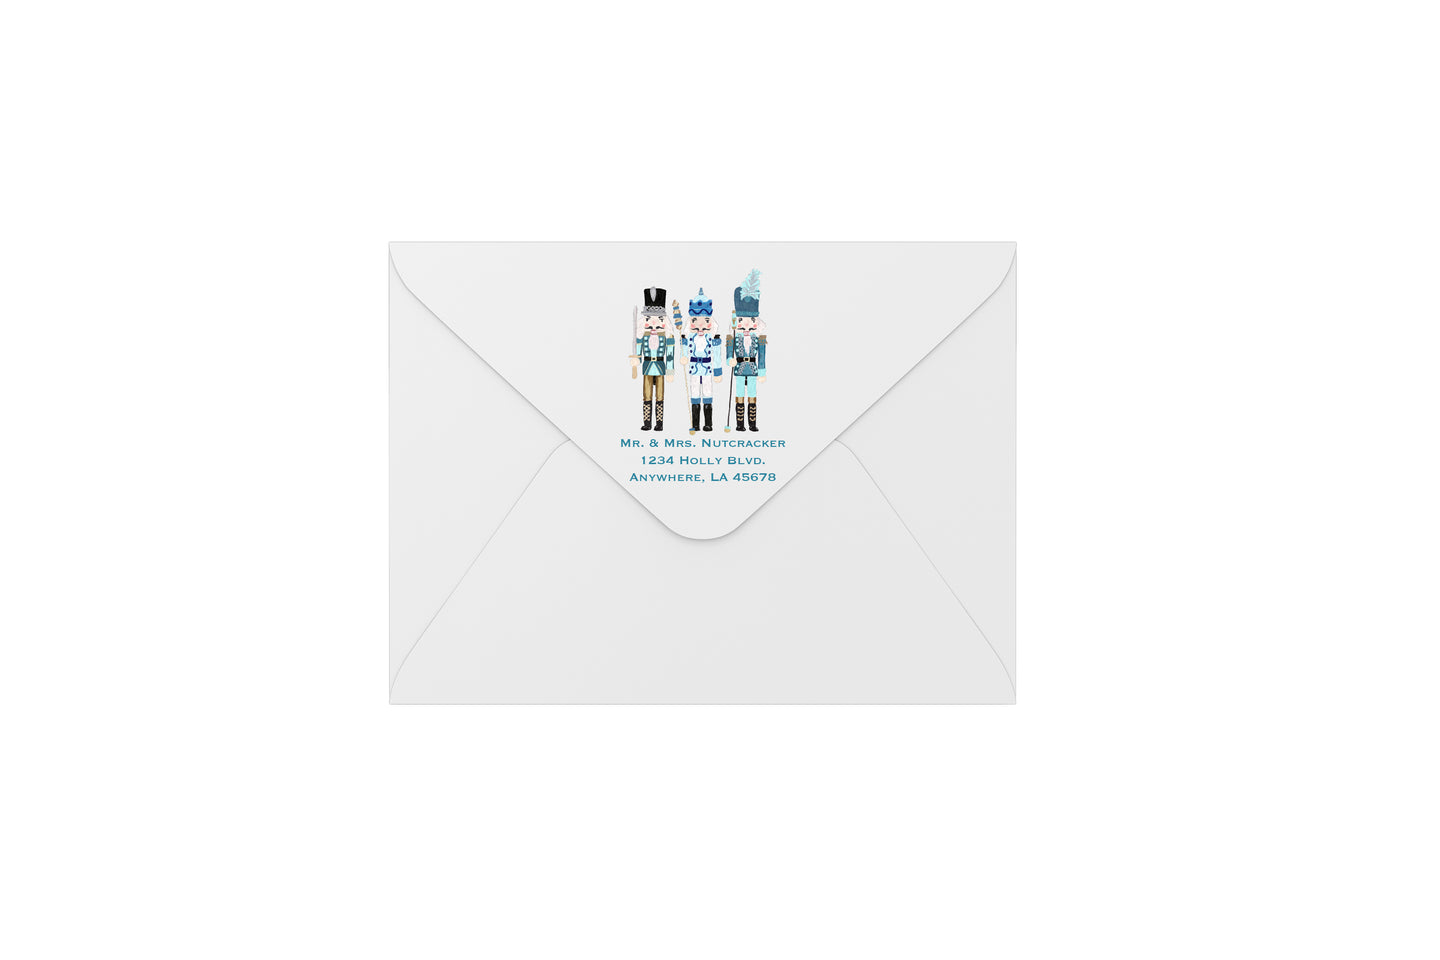 nutcracker in blue envelopes - address printing